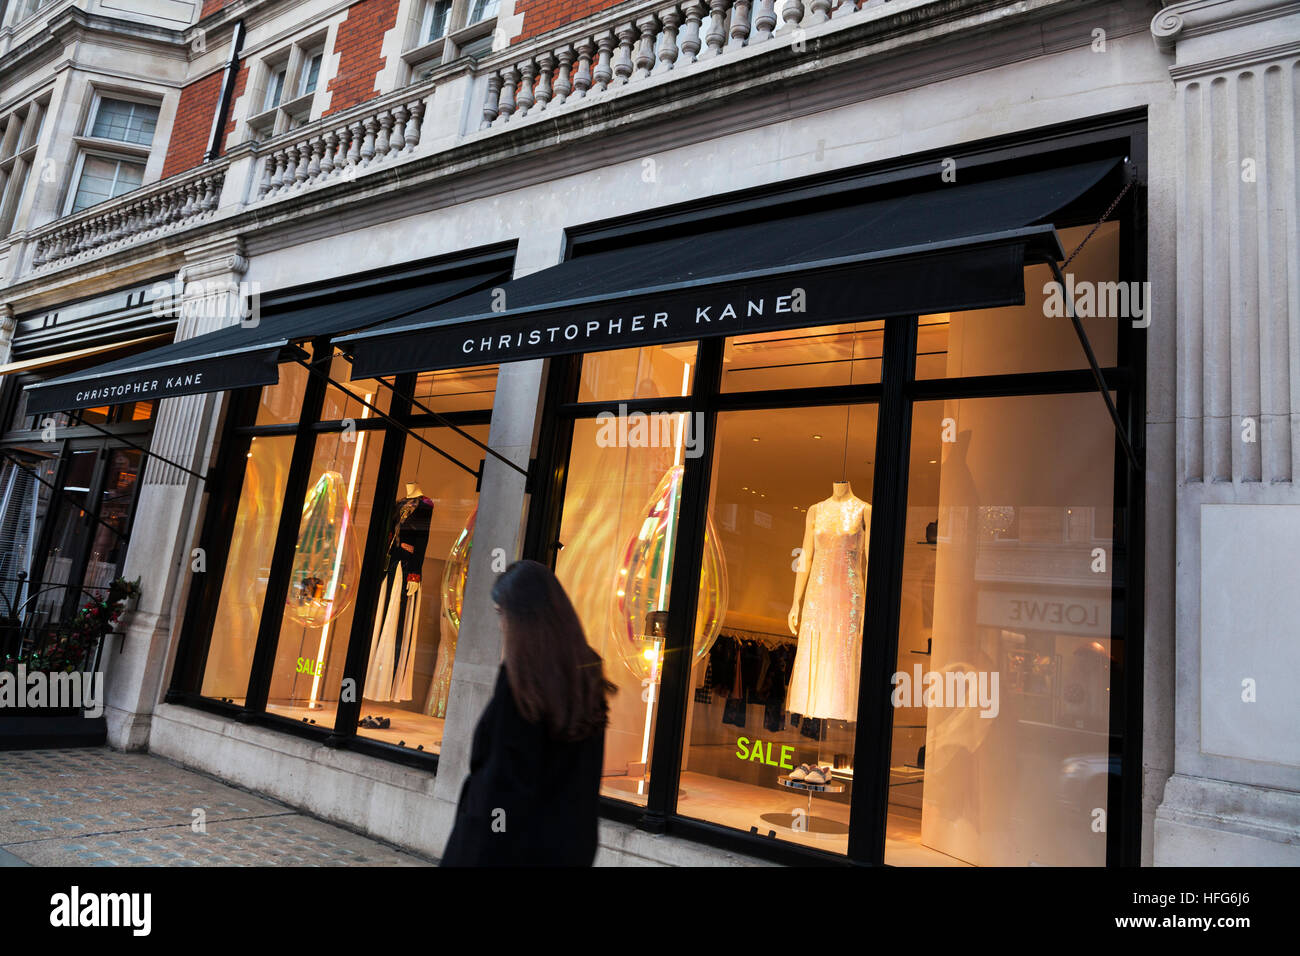 Christopher Kane abiti firmati store su Mount Street a Mayfair, Londra Foto Stock